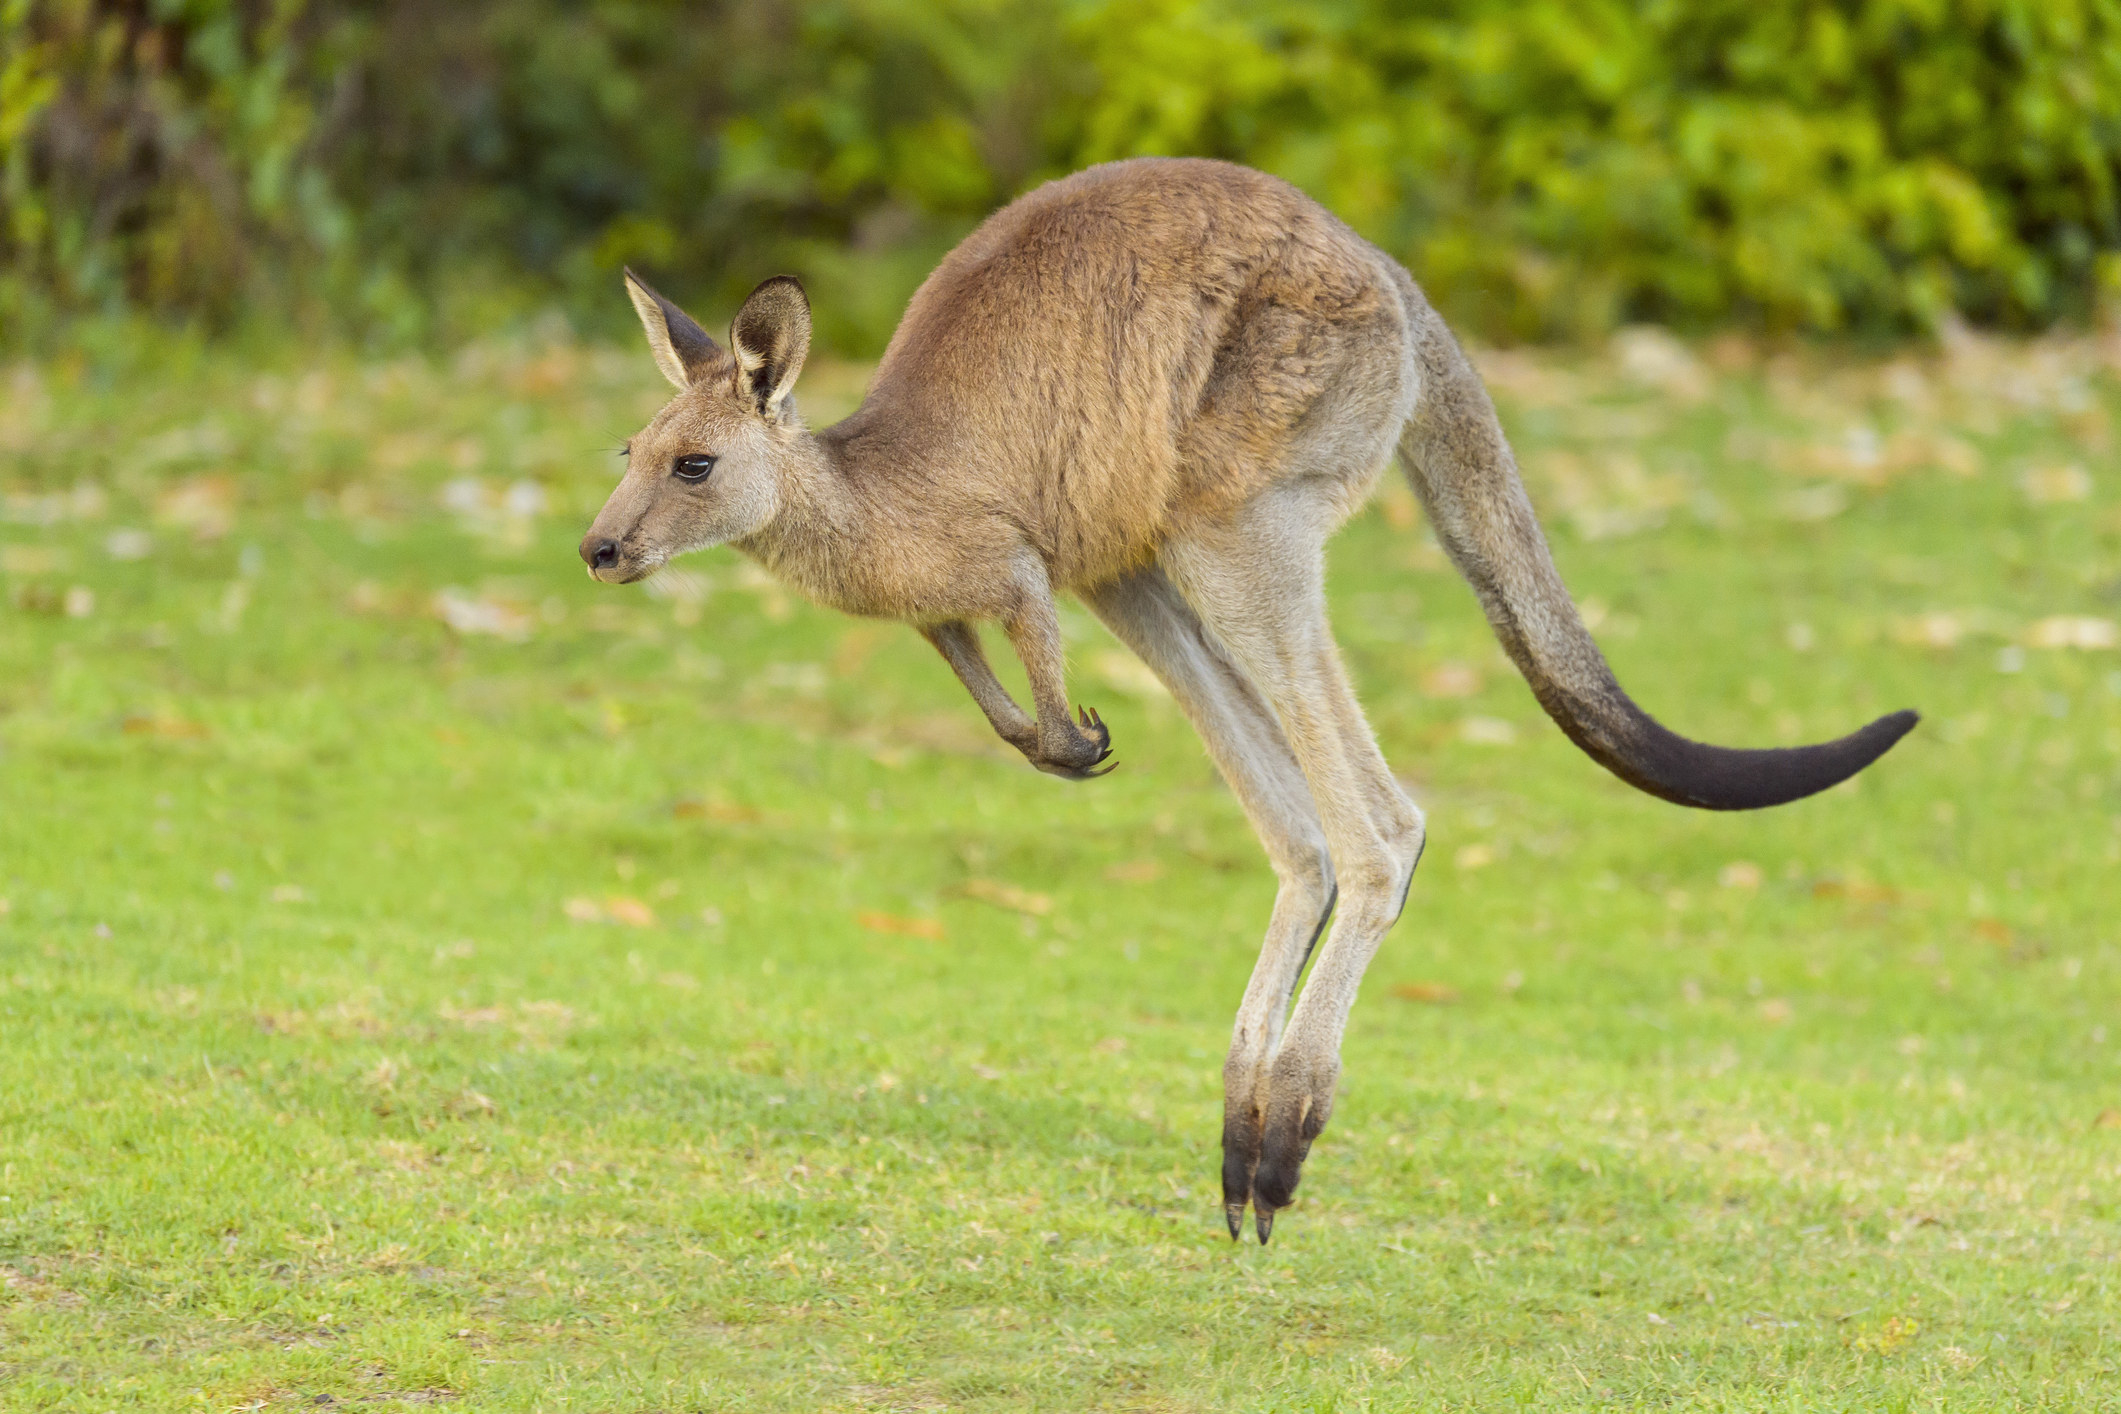 A kangaroo hopping in the grass